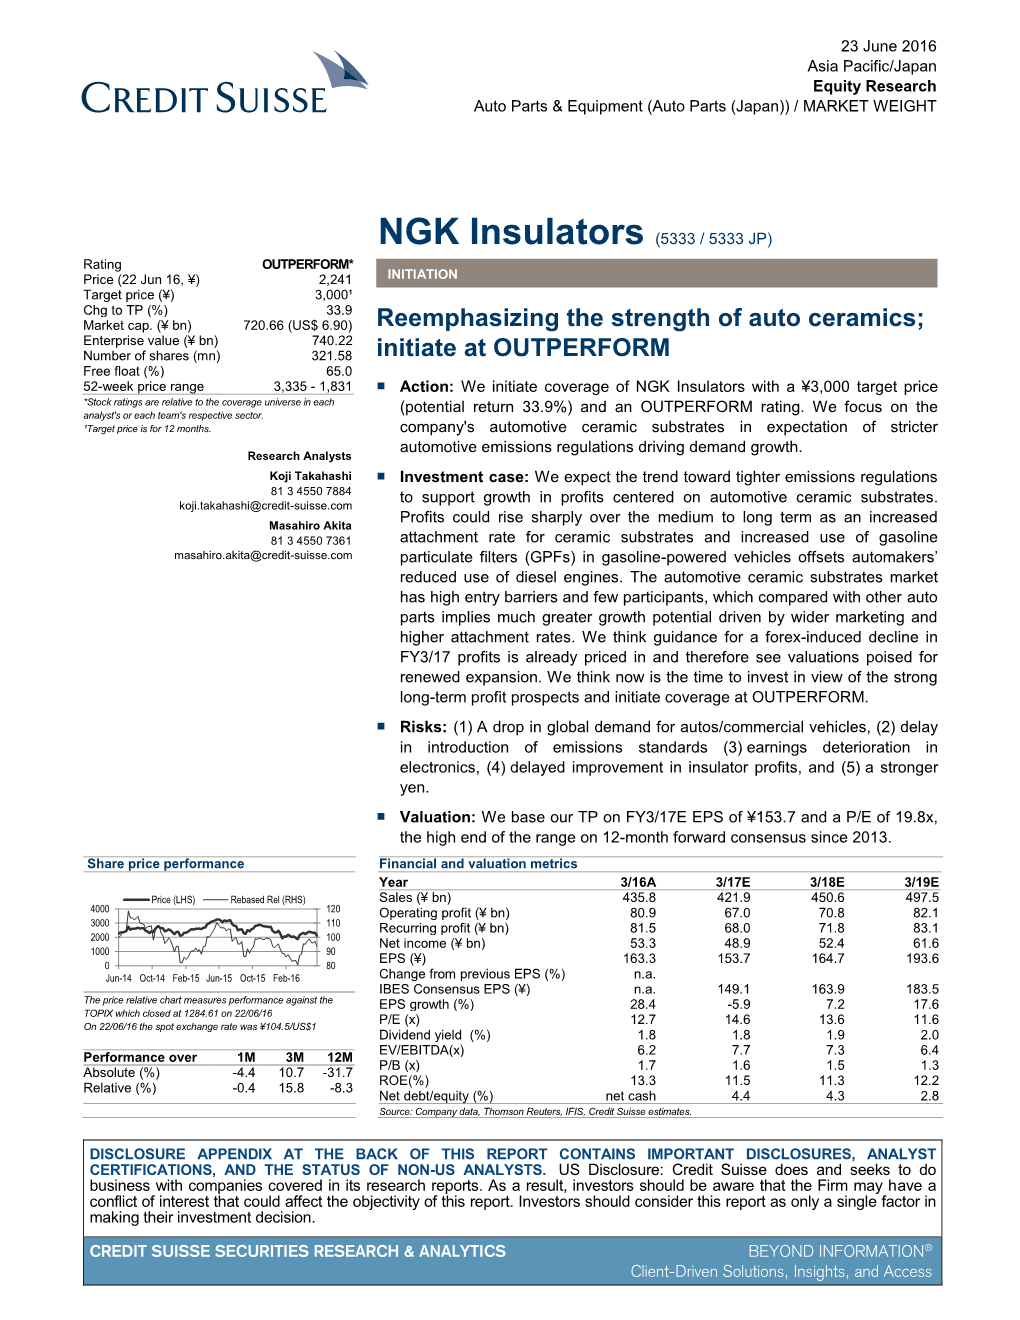 NGK Insulators (5333) 12M-Fwd PER Simple Average 20.0 +1 St-Dev., 27.5 -1 St